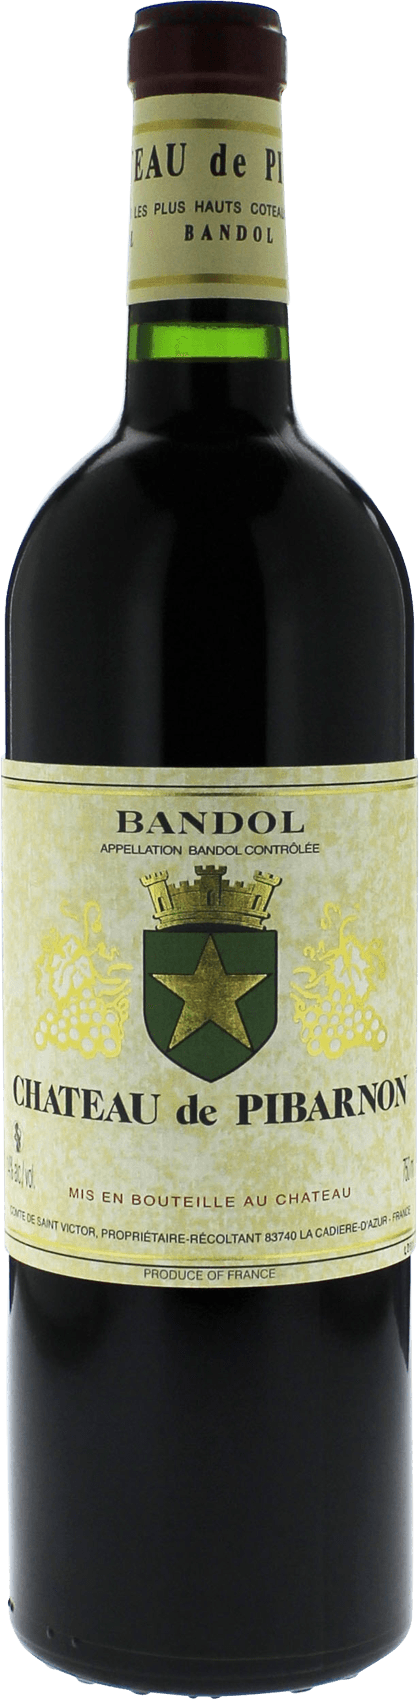 Bandol domaine de pibarnon rouge 2016  Bandol, Slection provence rouge